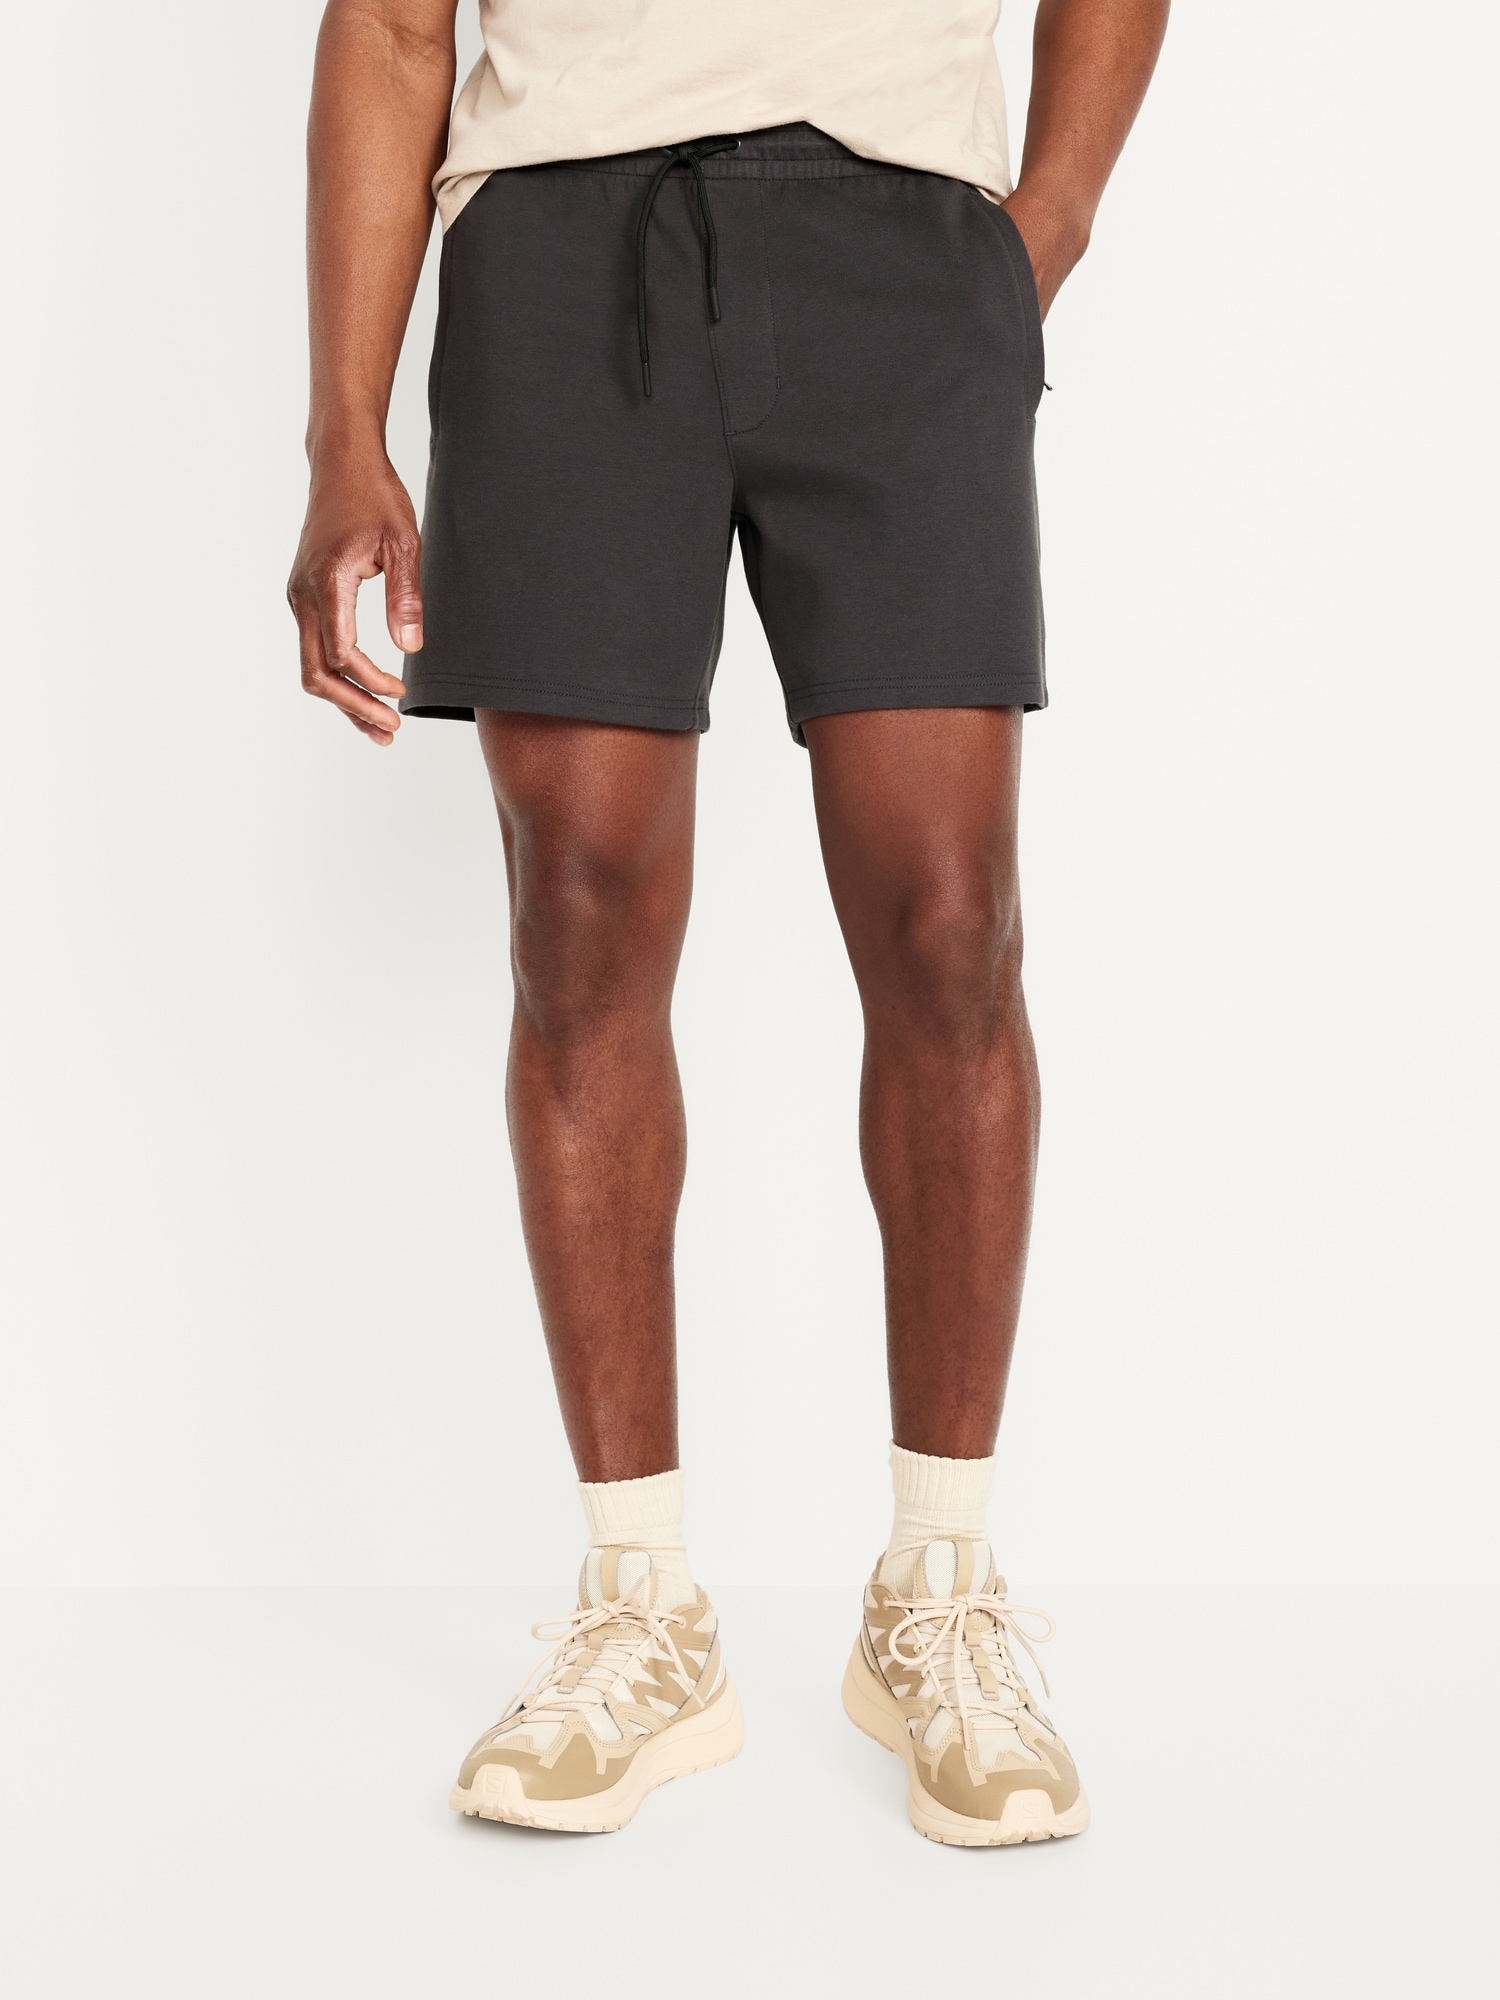 Dynamic Fleece Shorts -- 6-inch inseam Hot Deal